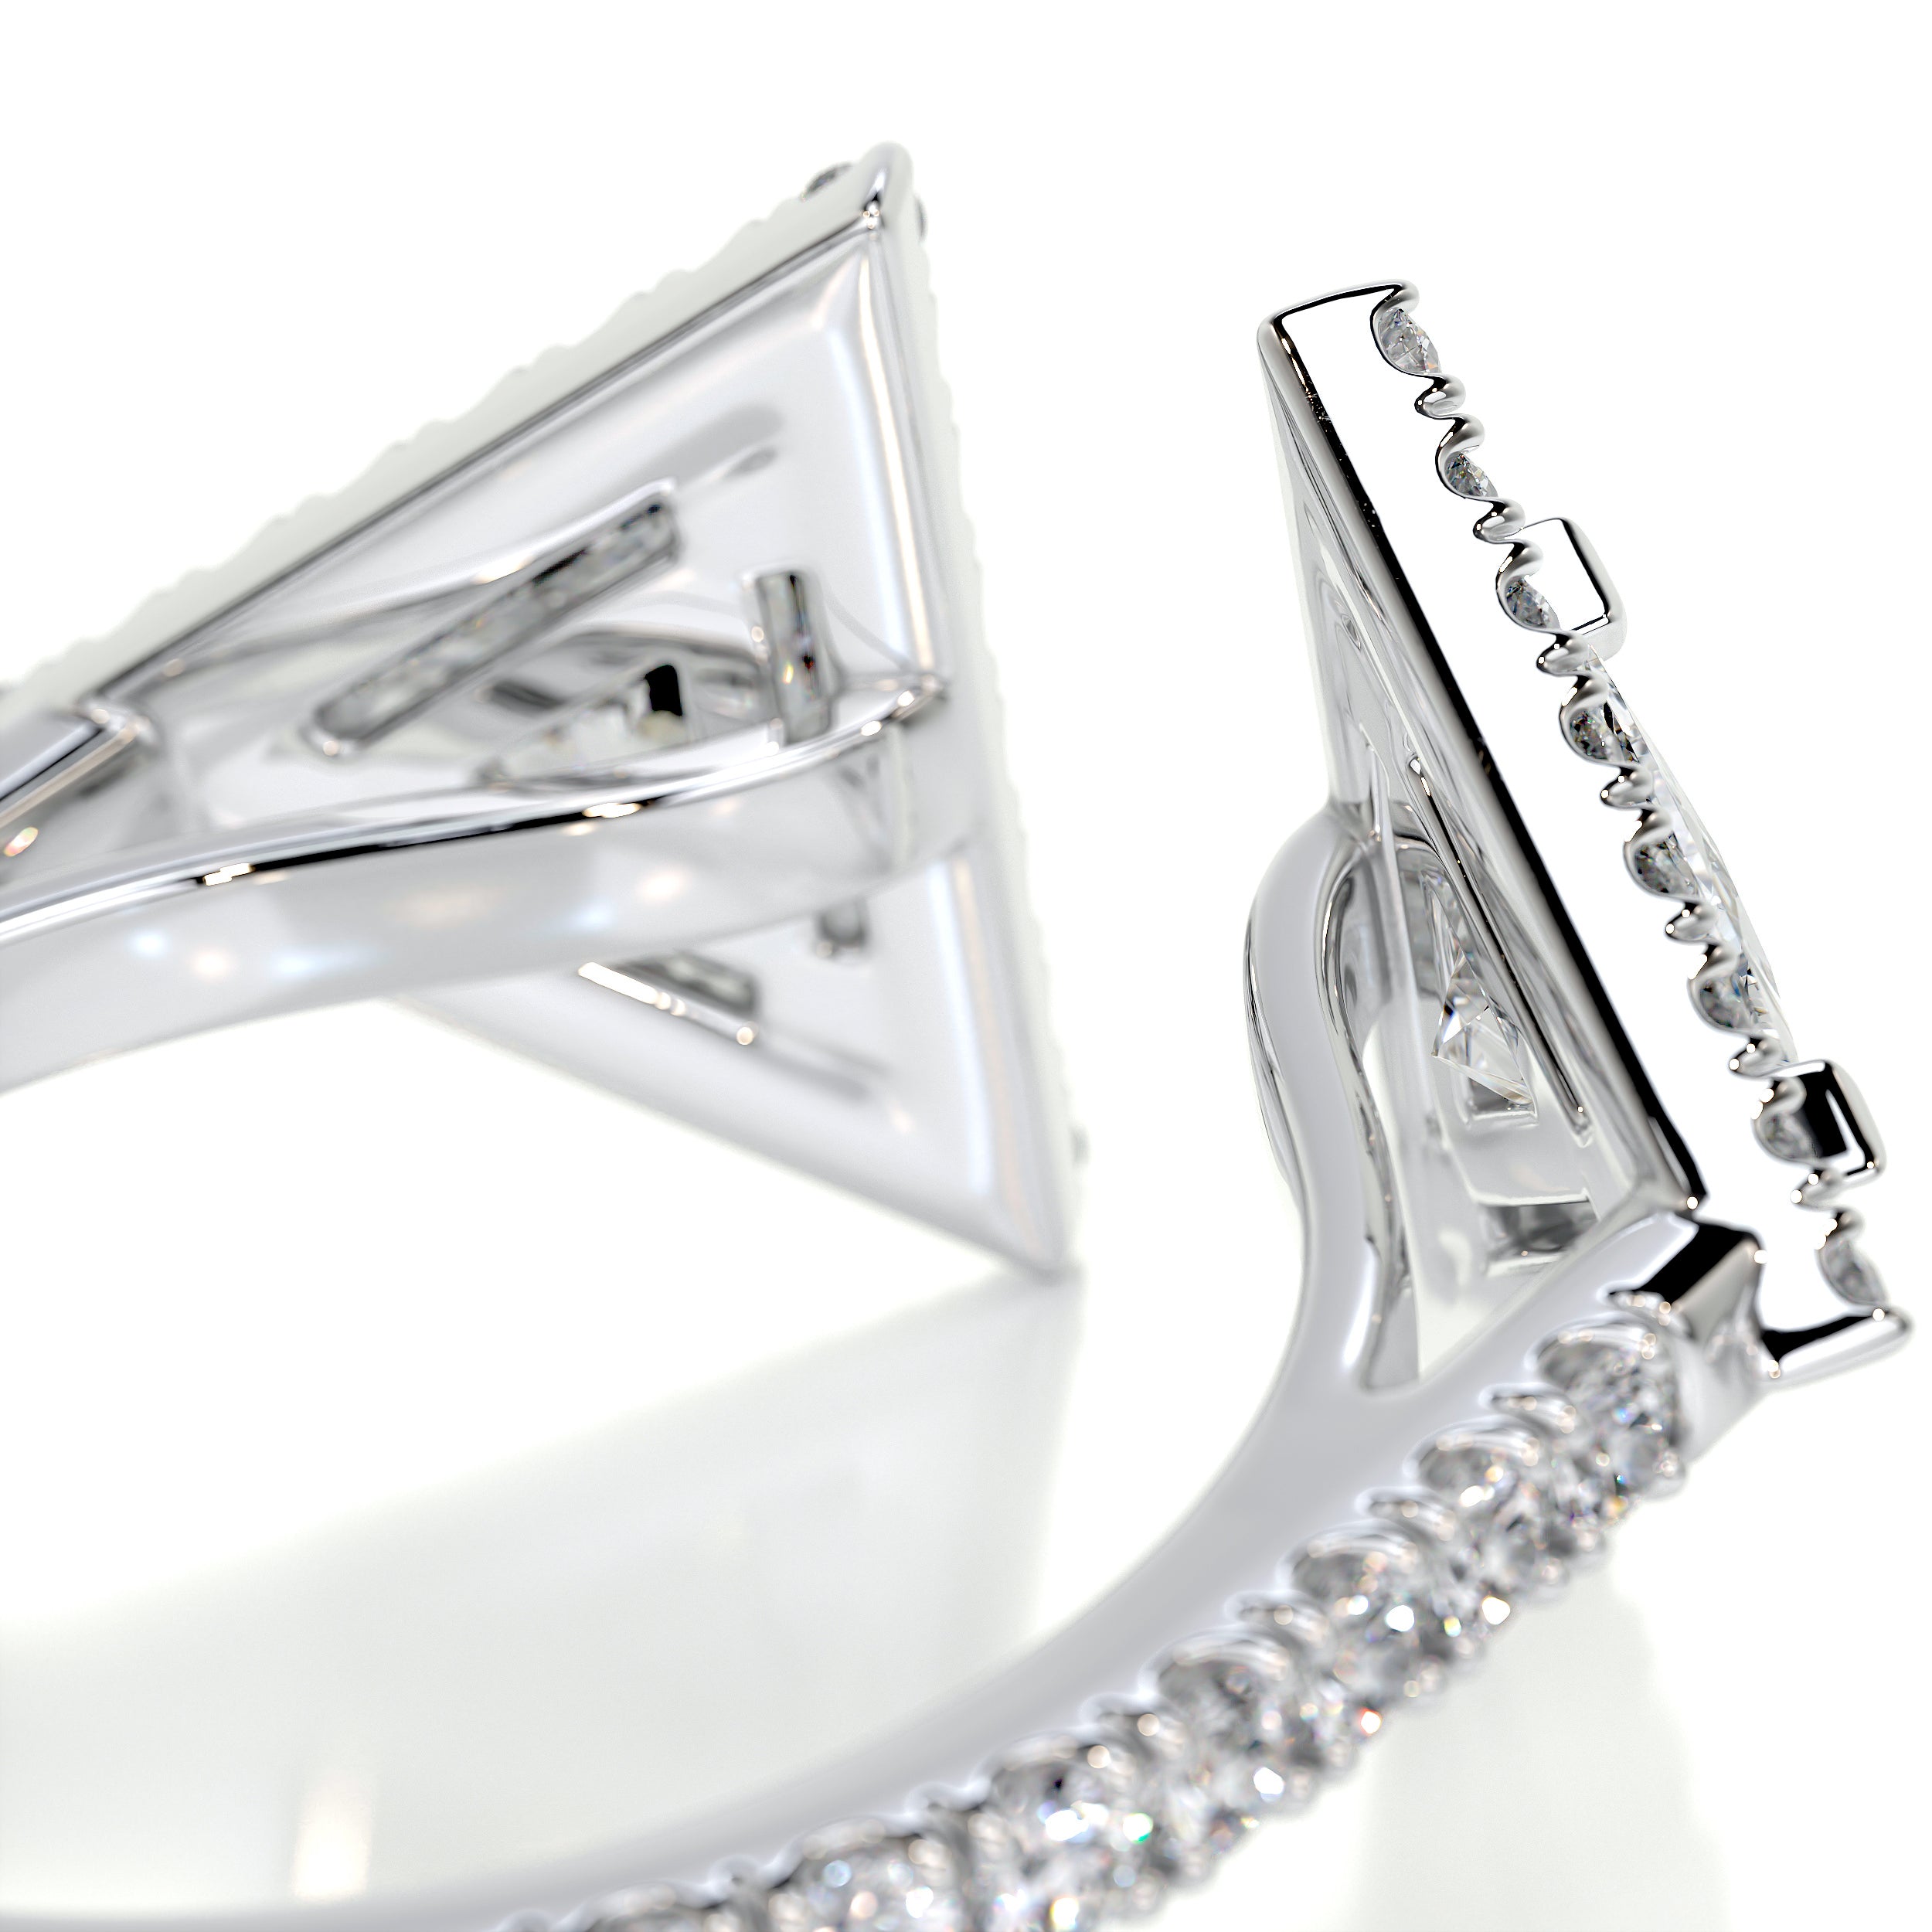 Olivia Fashion Diamond Ring   (1 carat) -14K White Gold